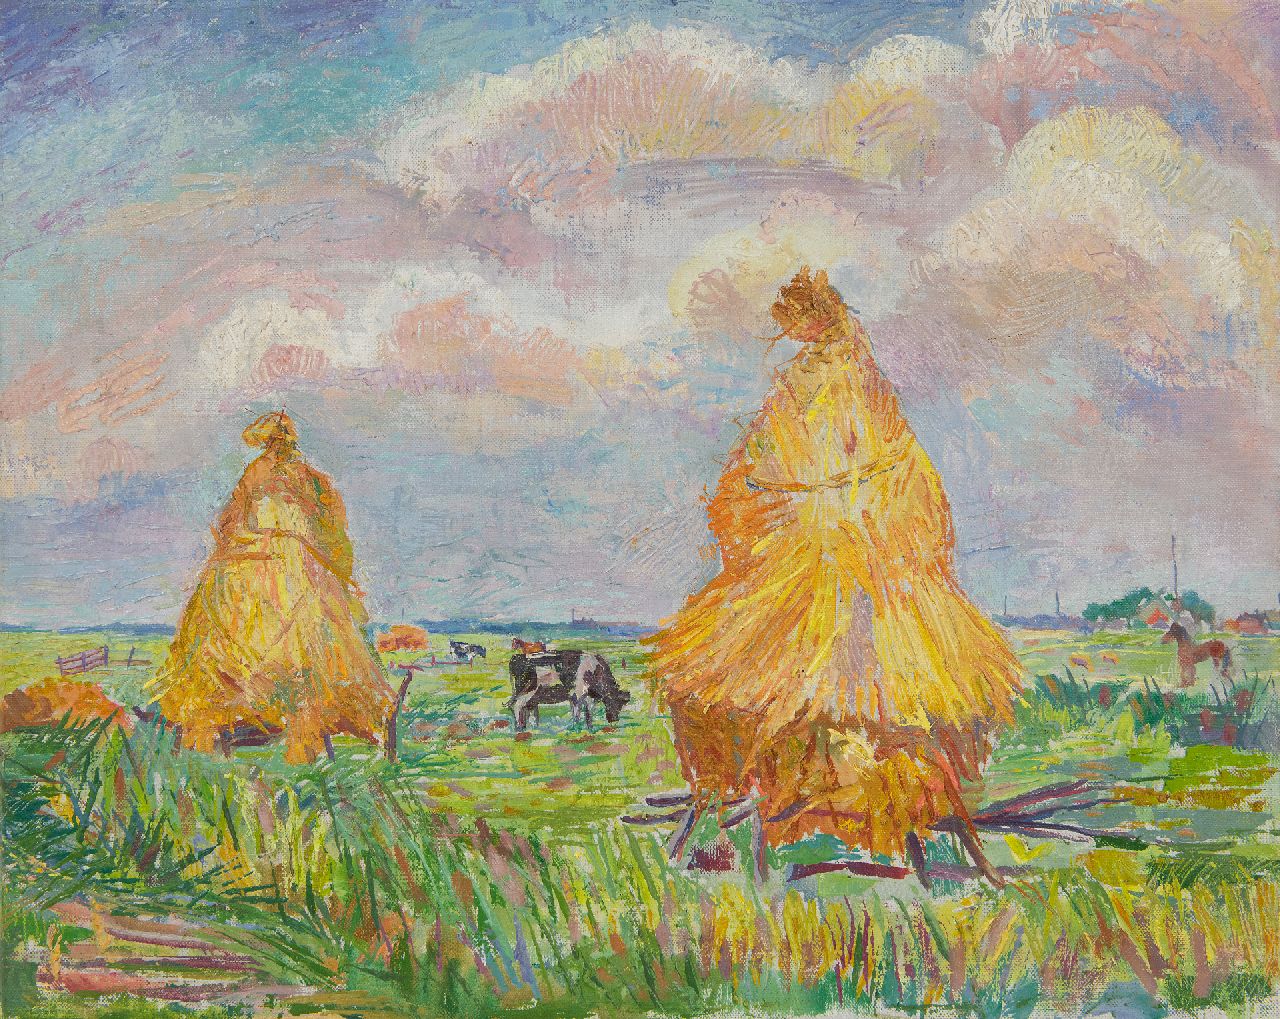 Pijpers E.E.  | 'Edith' Elizabeth Pijpers, Heuschober im Feld, Öl auf Leinwand 36,9 x 45,8 cm